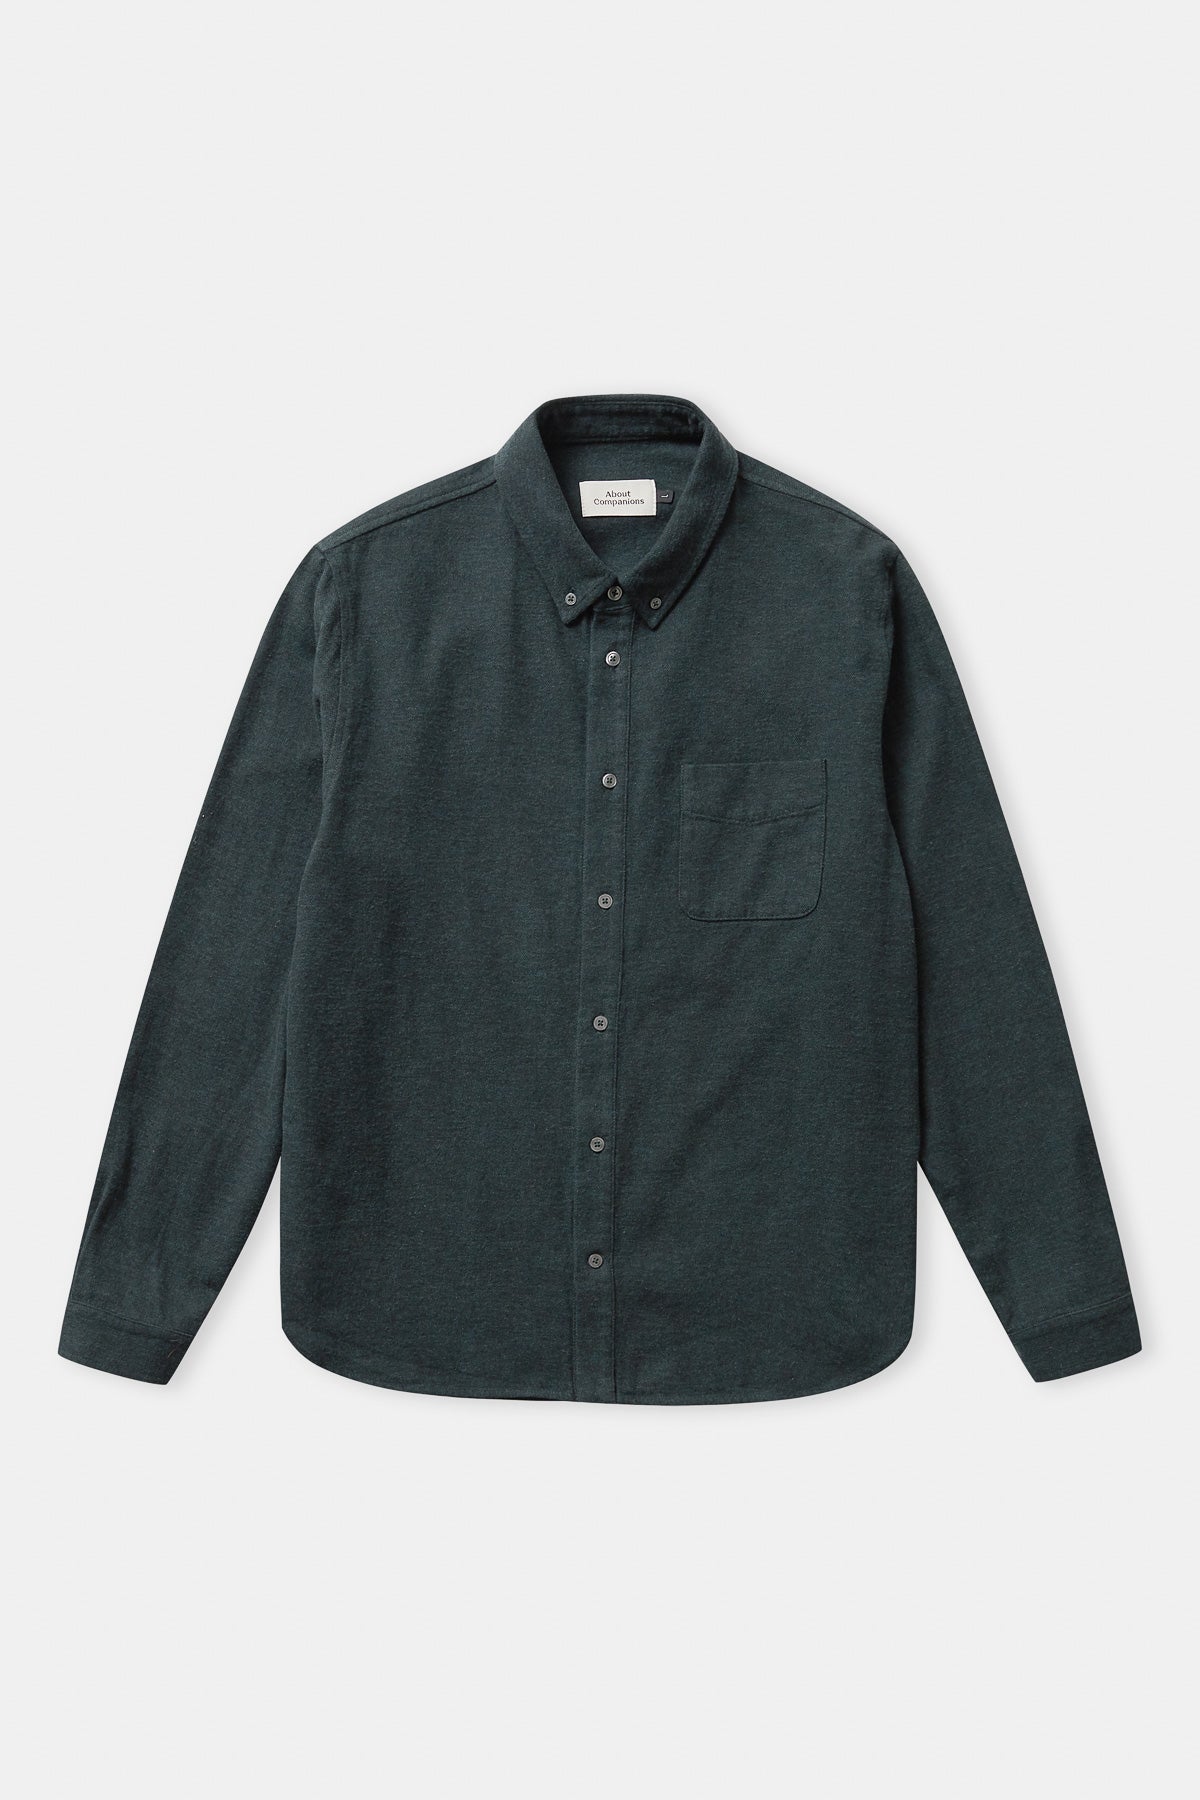 KEN shirt eco scot green flannel